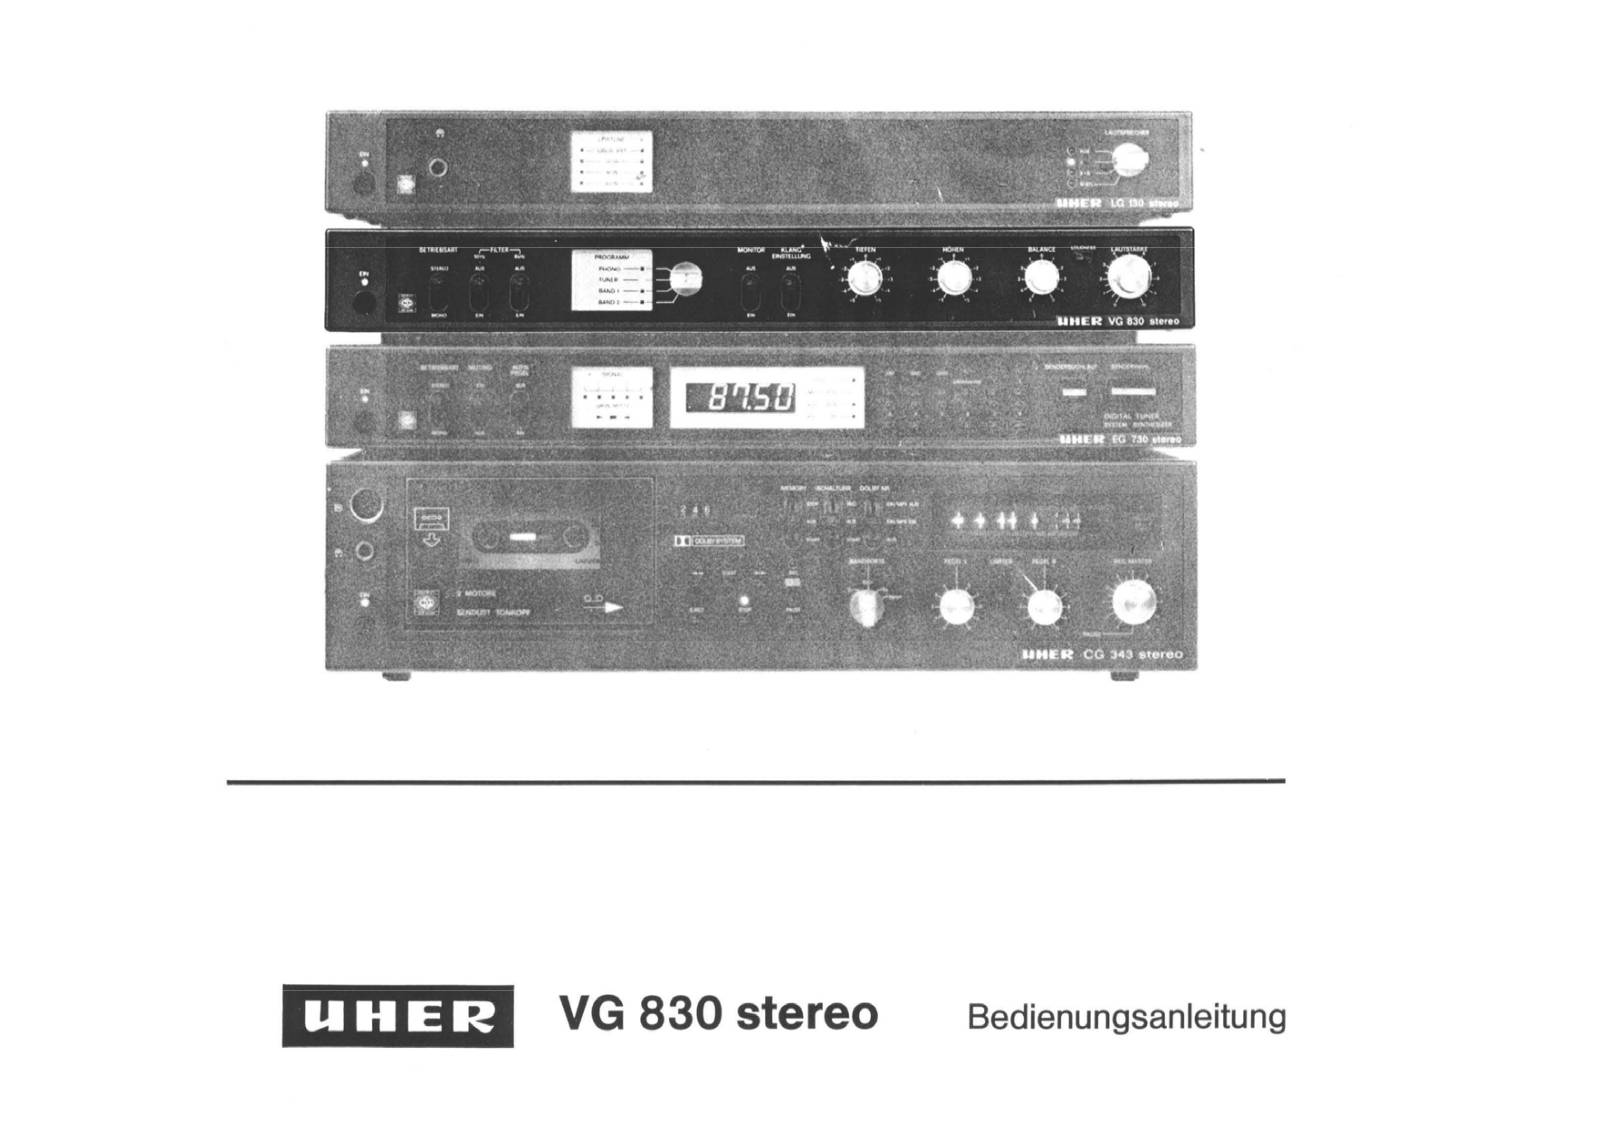 Uher VG 830